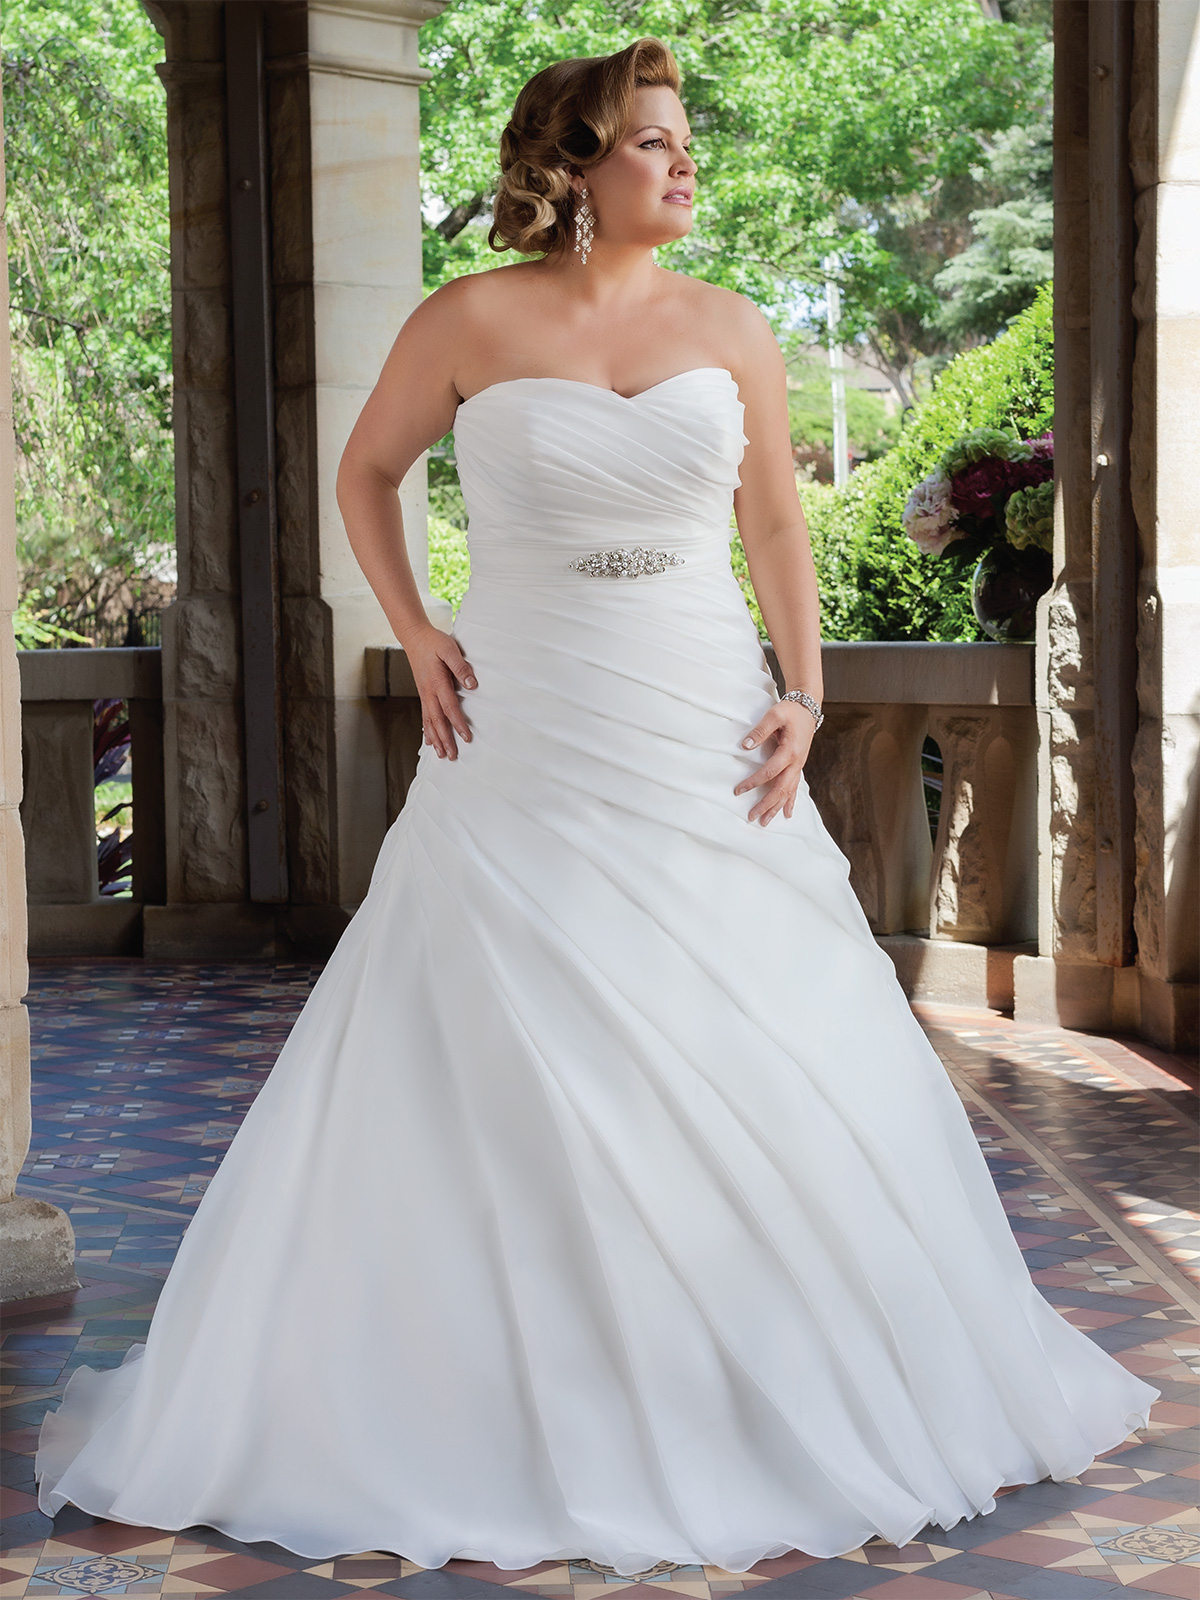 A plus size chiffon wedding dress with simple elegance